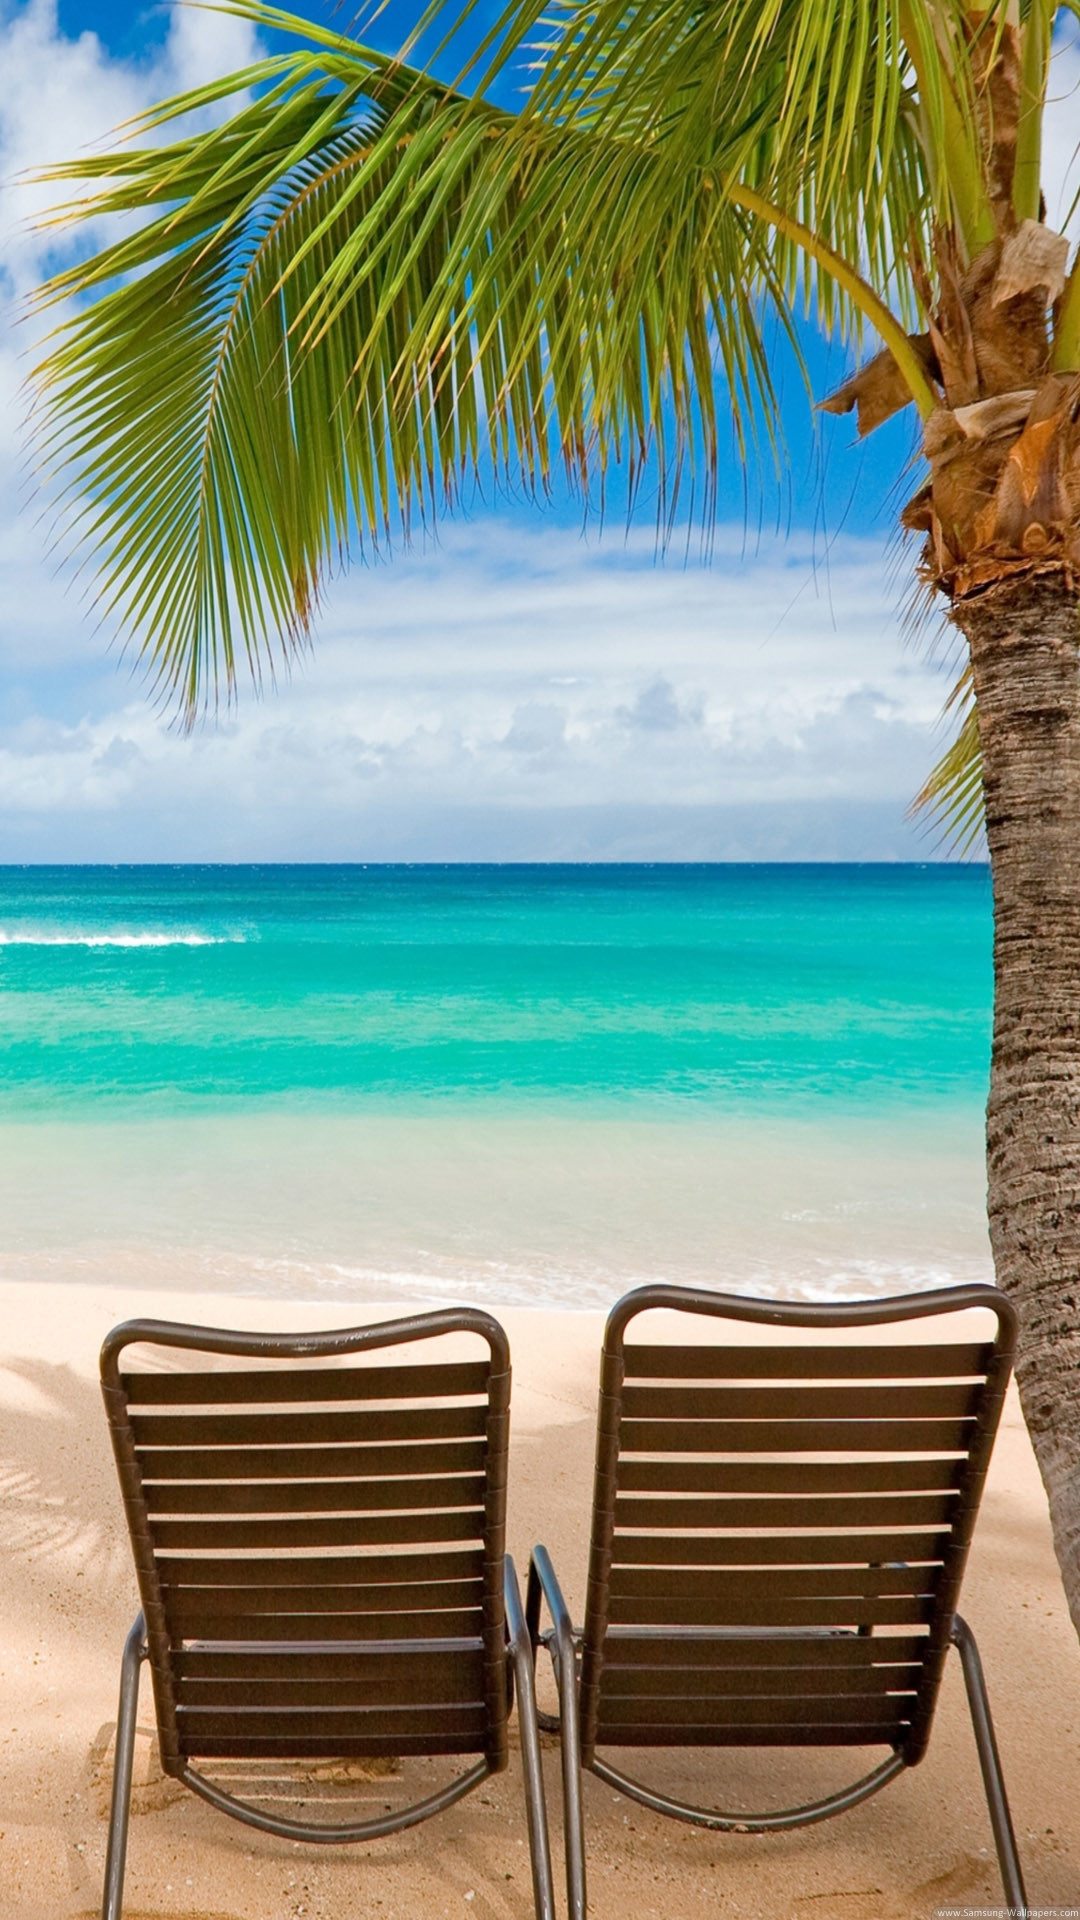 Tropical Beach Relaxation iPhone 6 Plus HD Wallpaper